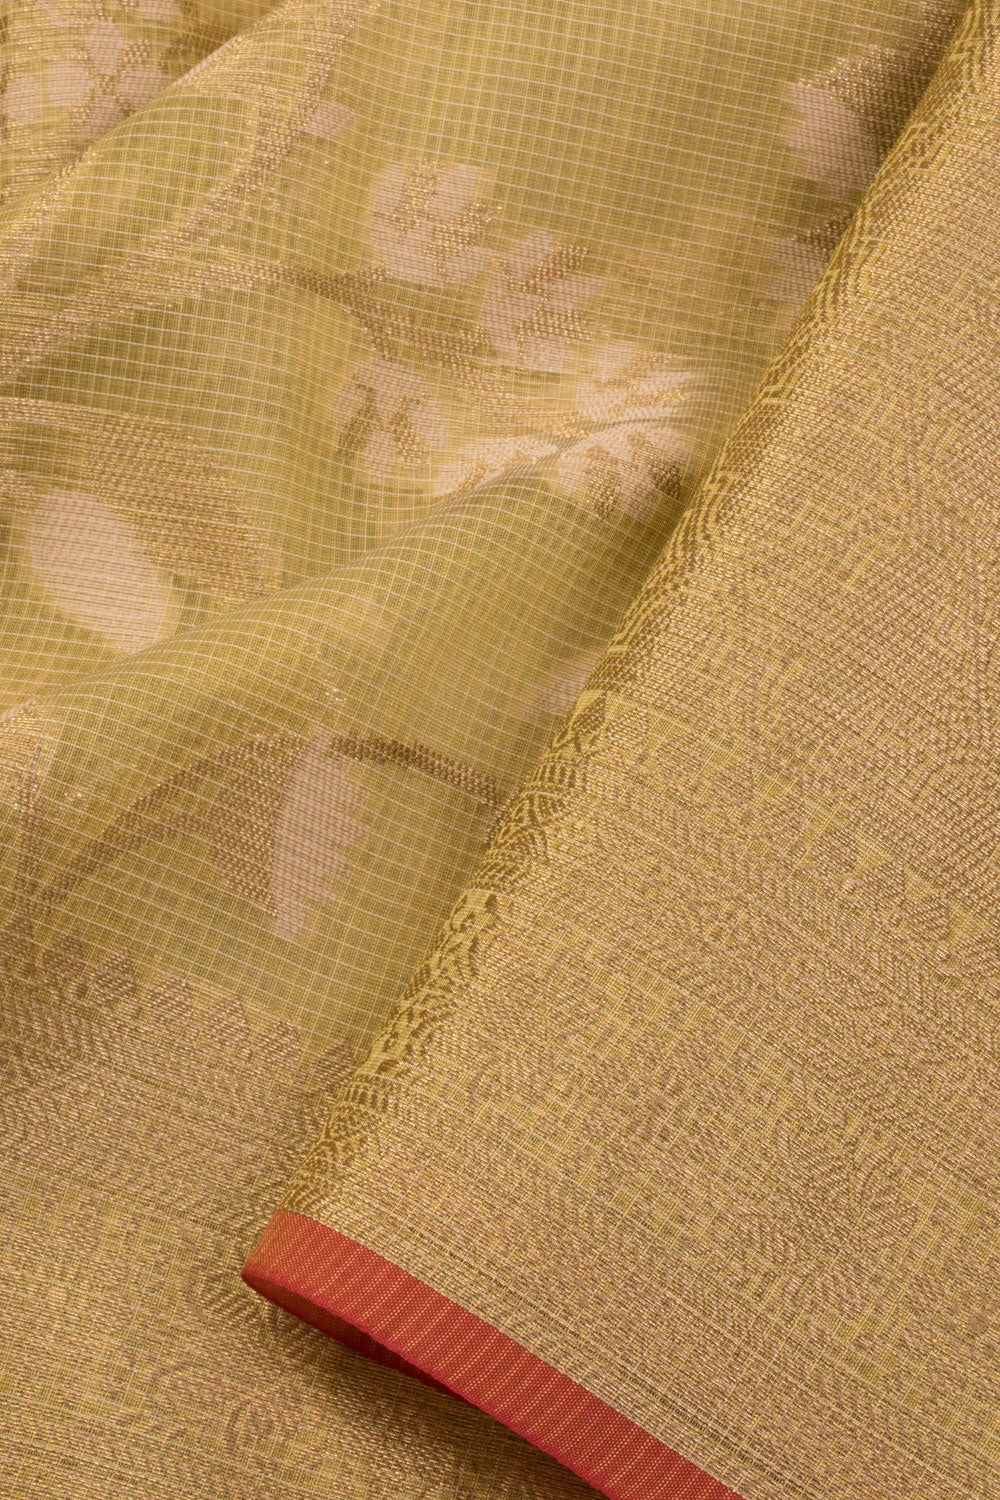 Green Handloom Banarasi Silk Cotton Saree 10070515